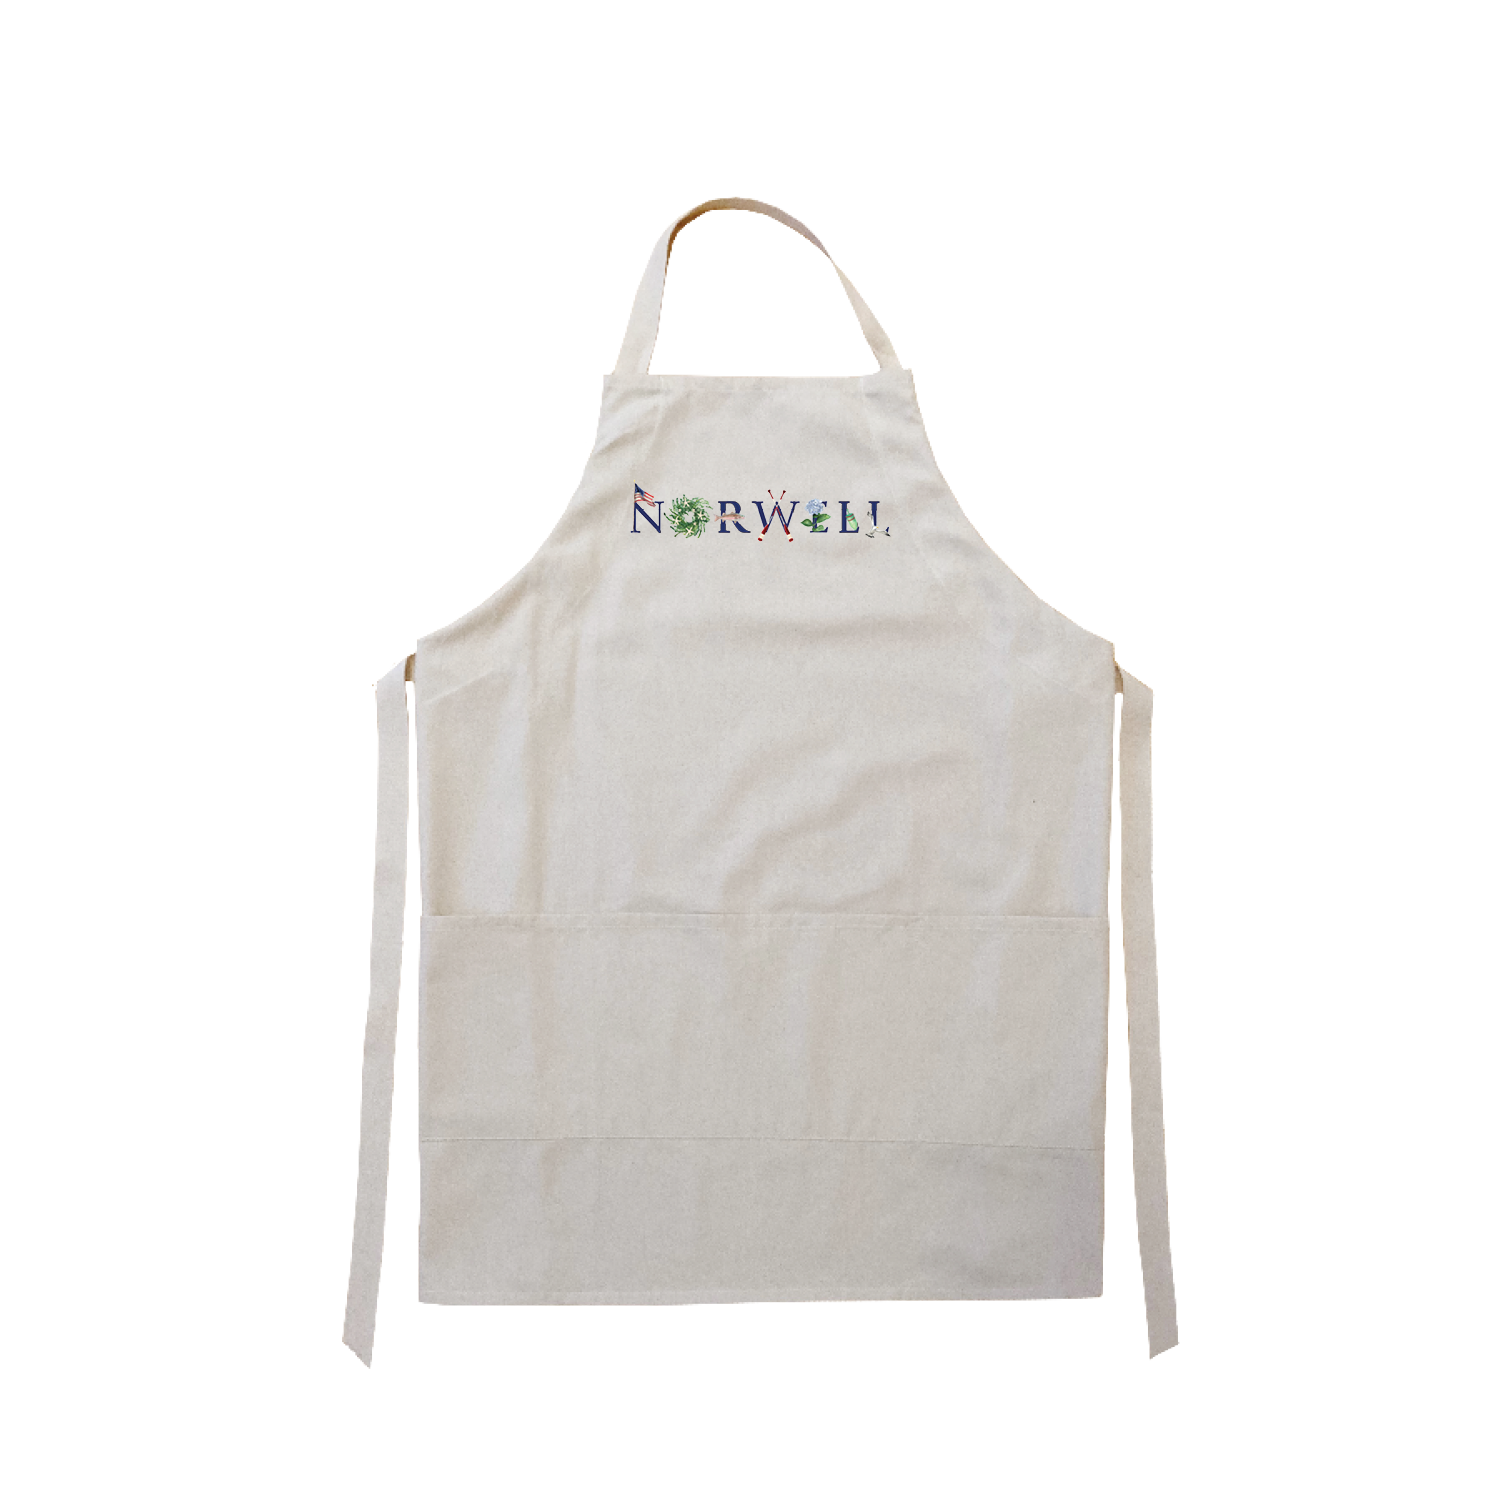 Norwell apron